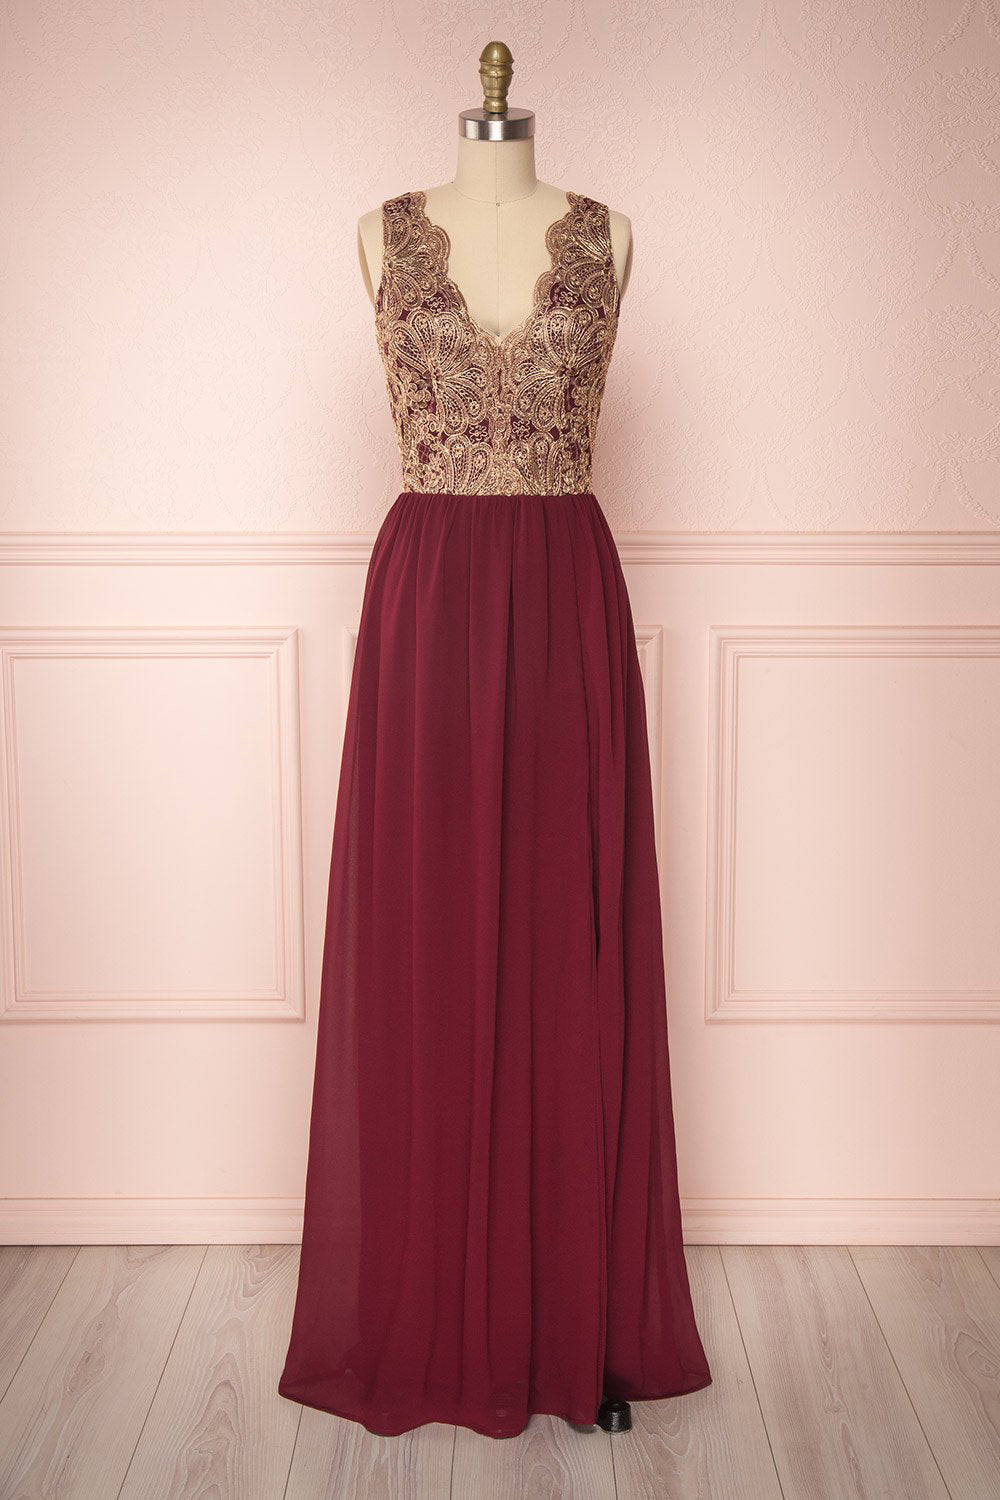 Dress at 25.000/= in maroon, gold,... - La Epic Boutique | Facebook